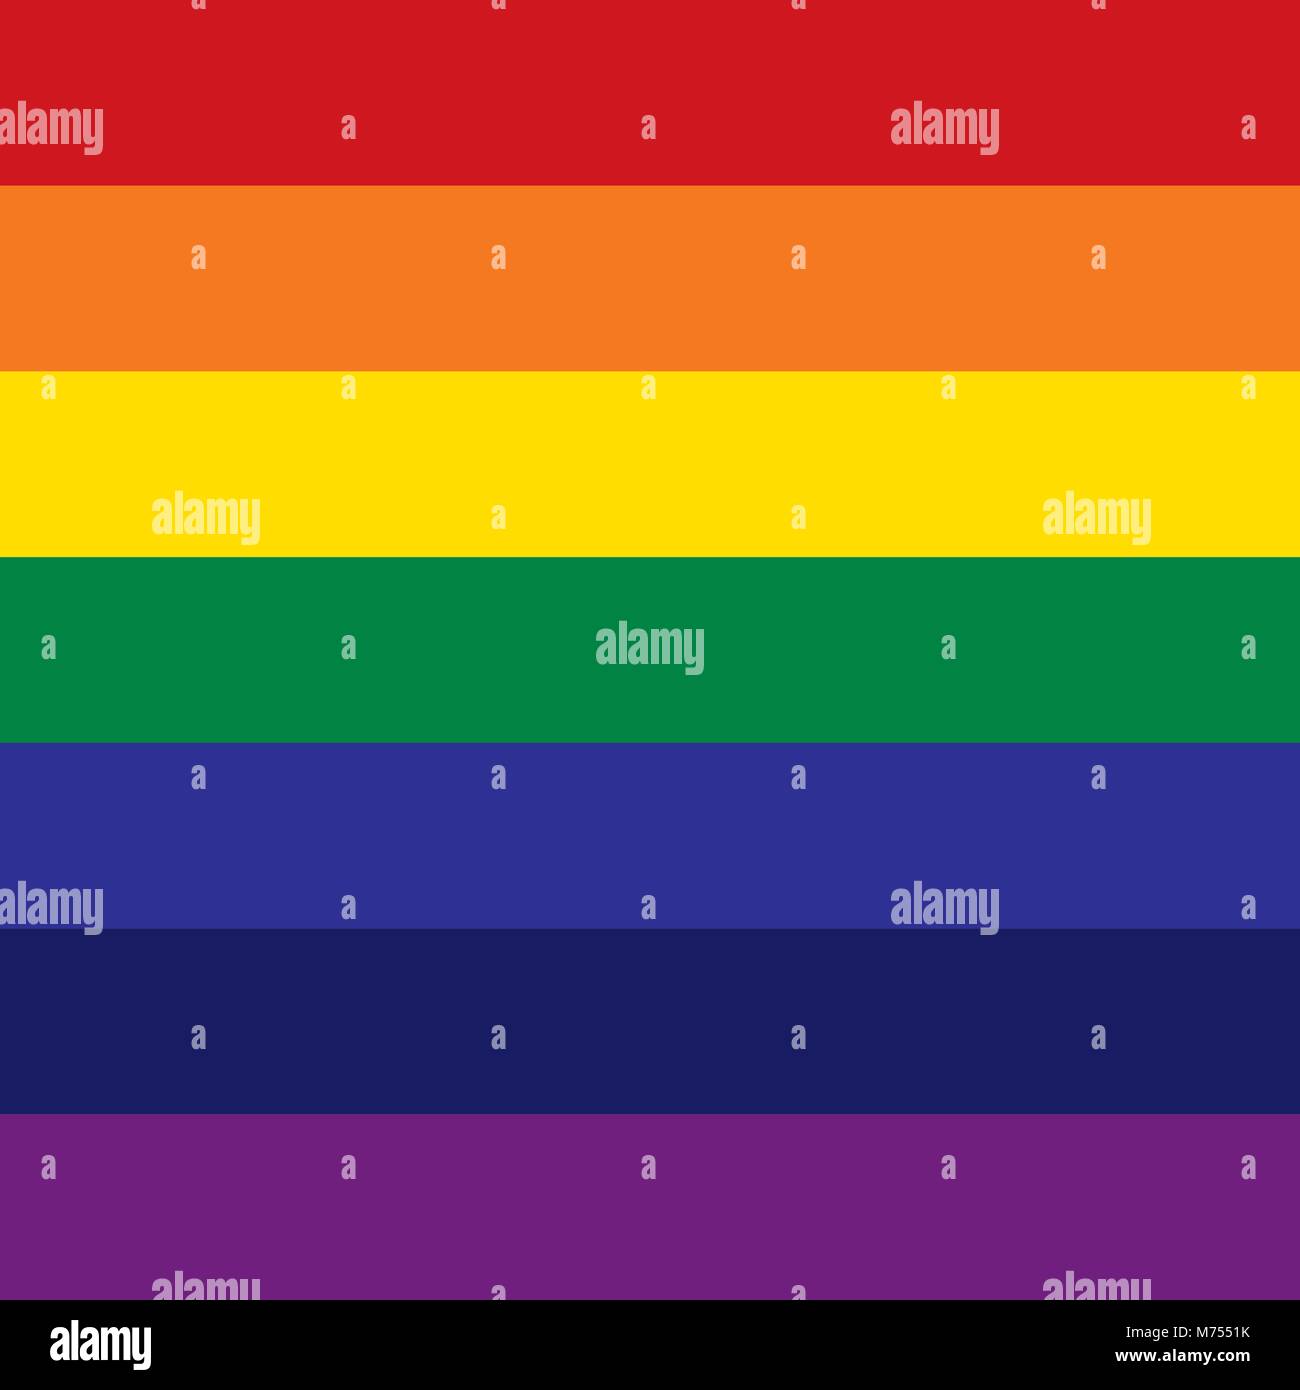 Regenbogen Farben: Rot, Orange, Gelb, Grün, Blau, Indigo, Violett  Stock-Vektorgrafik - Alamy